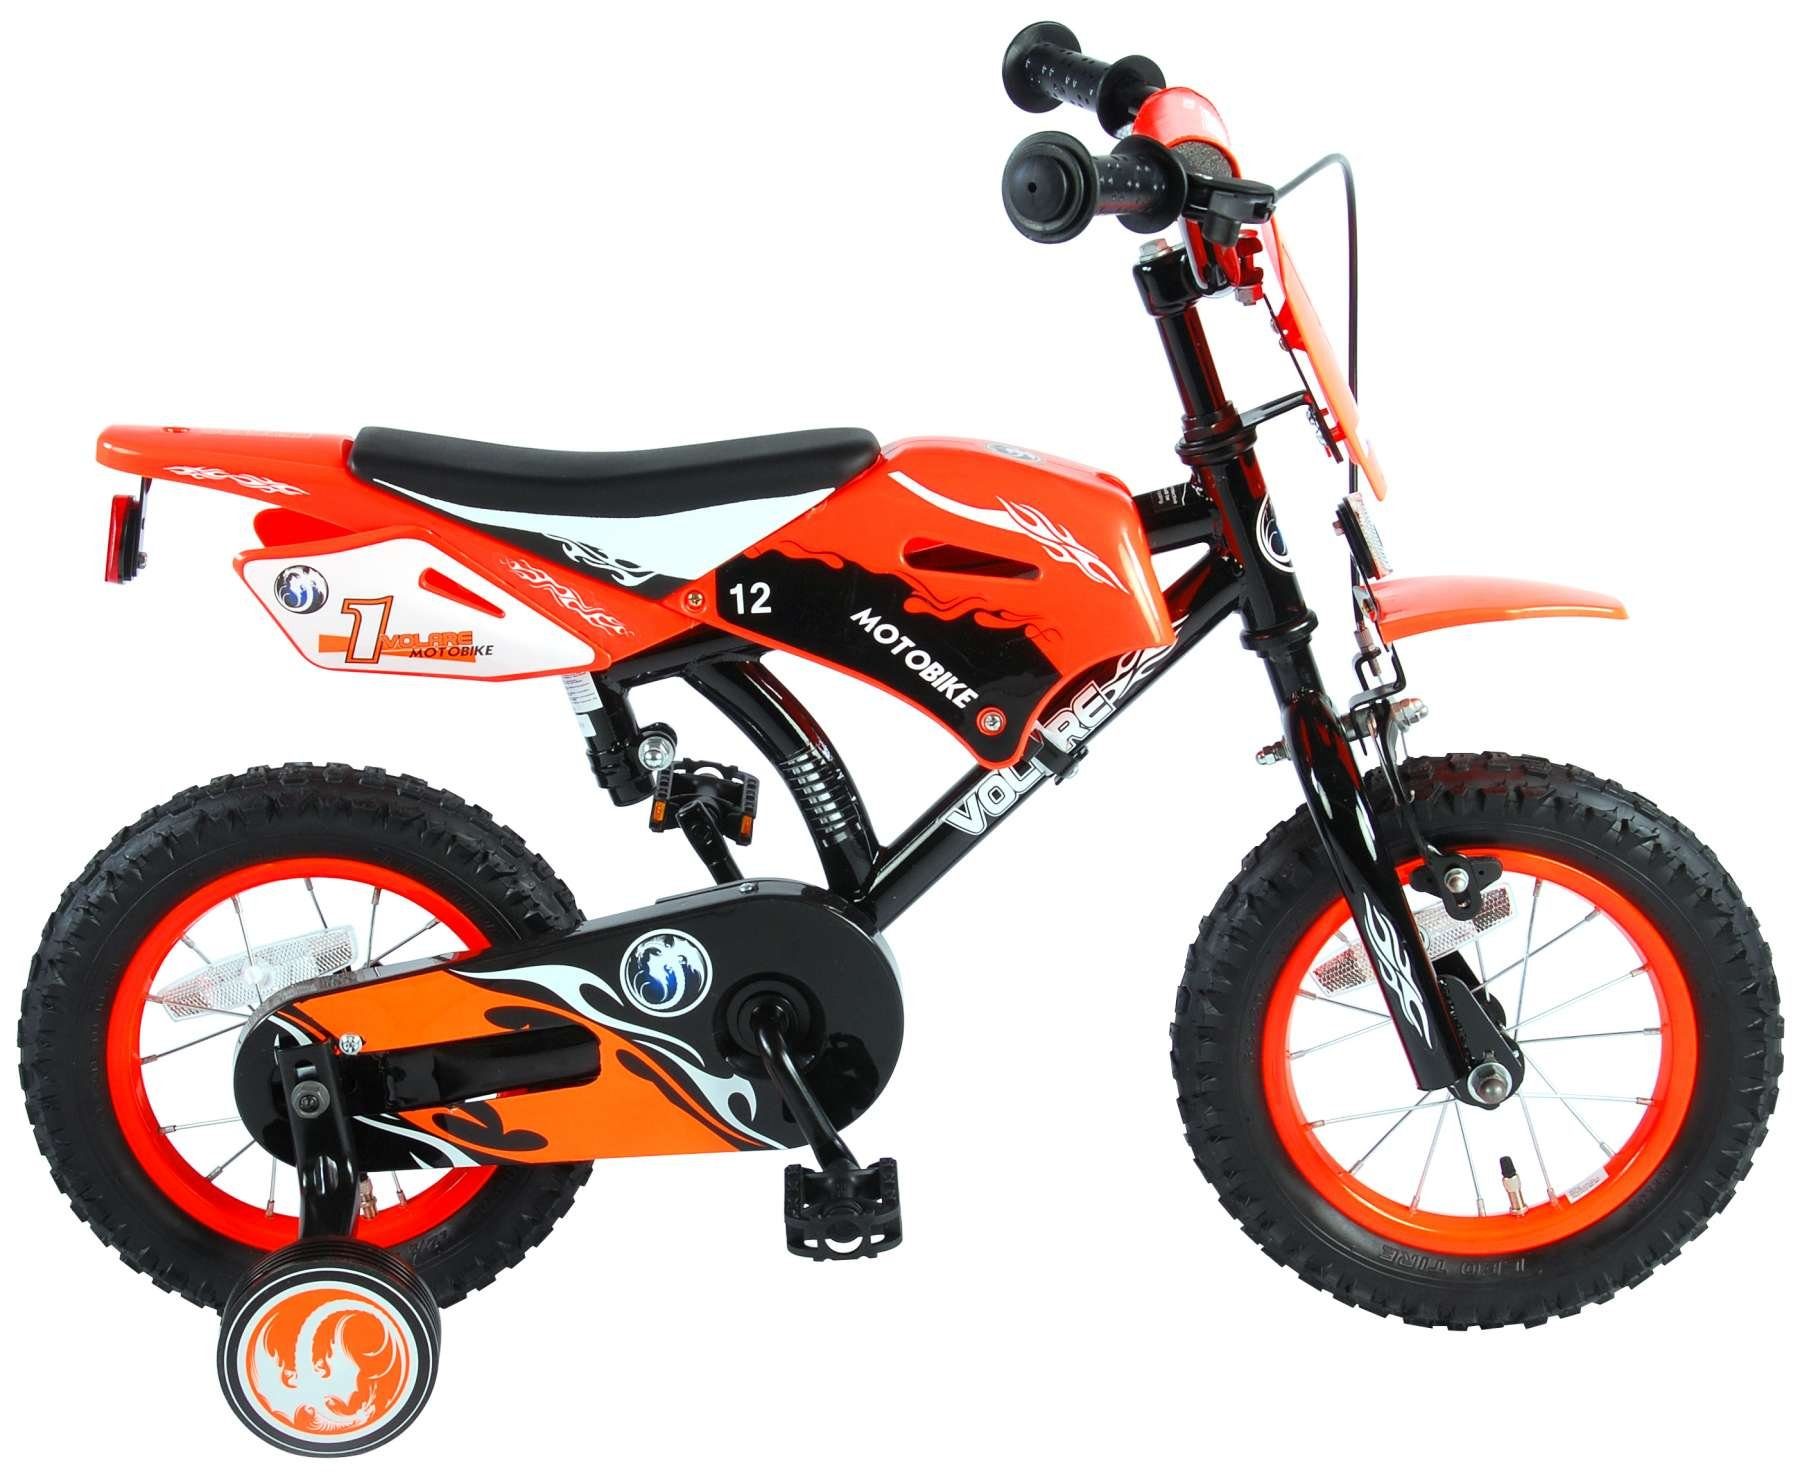 LeNoSa Kinderfahrrad Cross Motorrad Jungen-Mädchen-Fahrrad für Kinder 12 Zoll-Grün & Orange Orange (1x Hand + Rücktrittbremse) | Kinderfahrräder